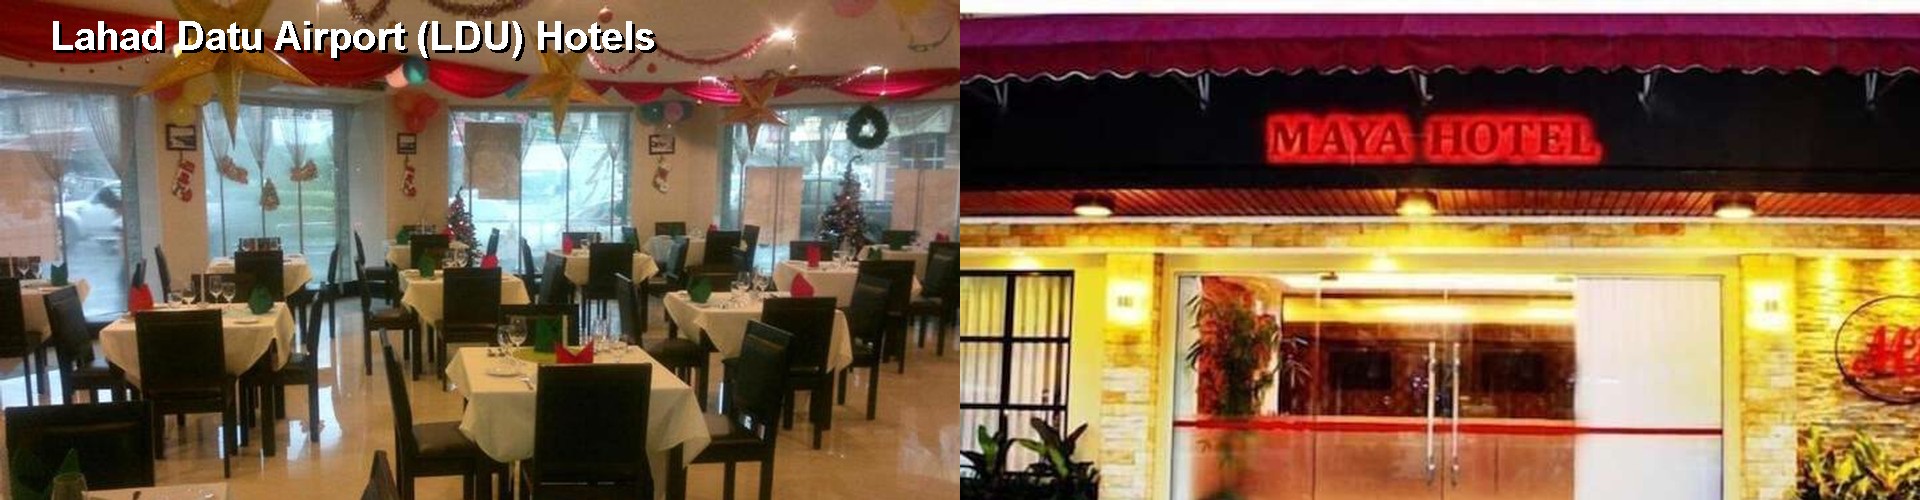 2 Best Hotels near Lahad Datu Airport (LDU)